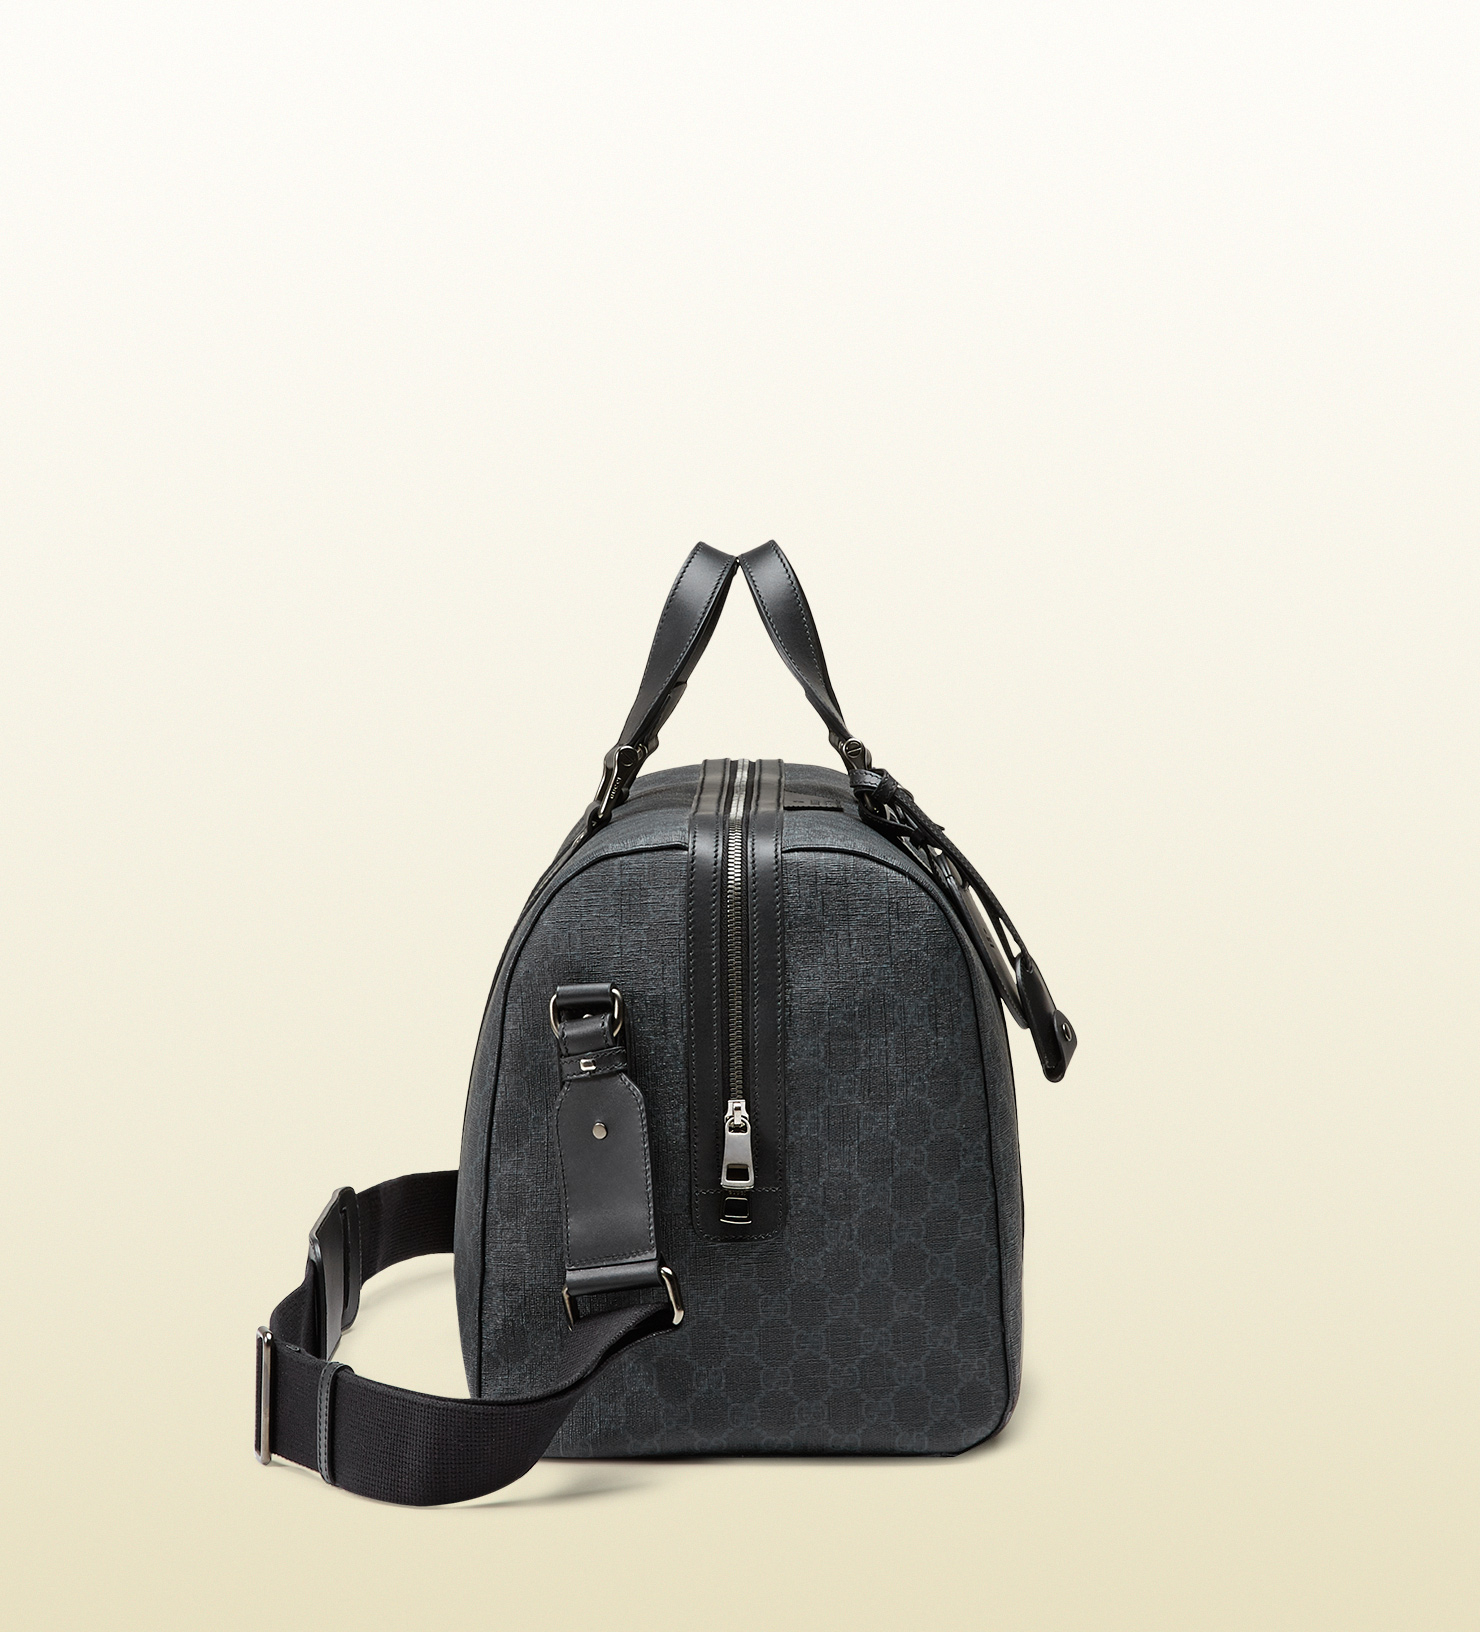 Luggage & Travel bags Gucci - GG Supreme carry-on duffle bag -  474131K5IAN1095